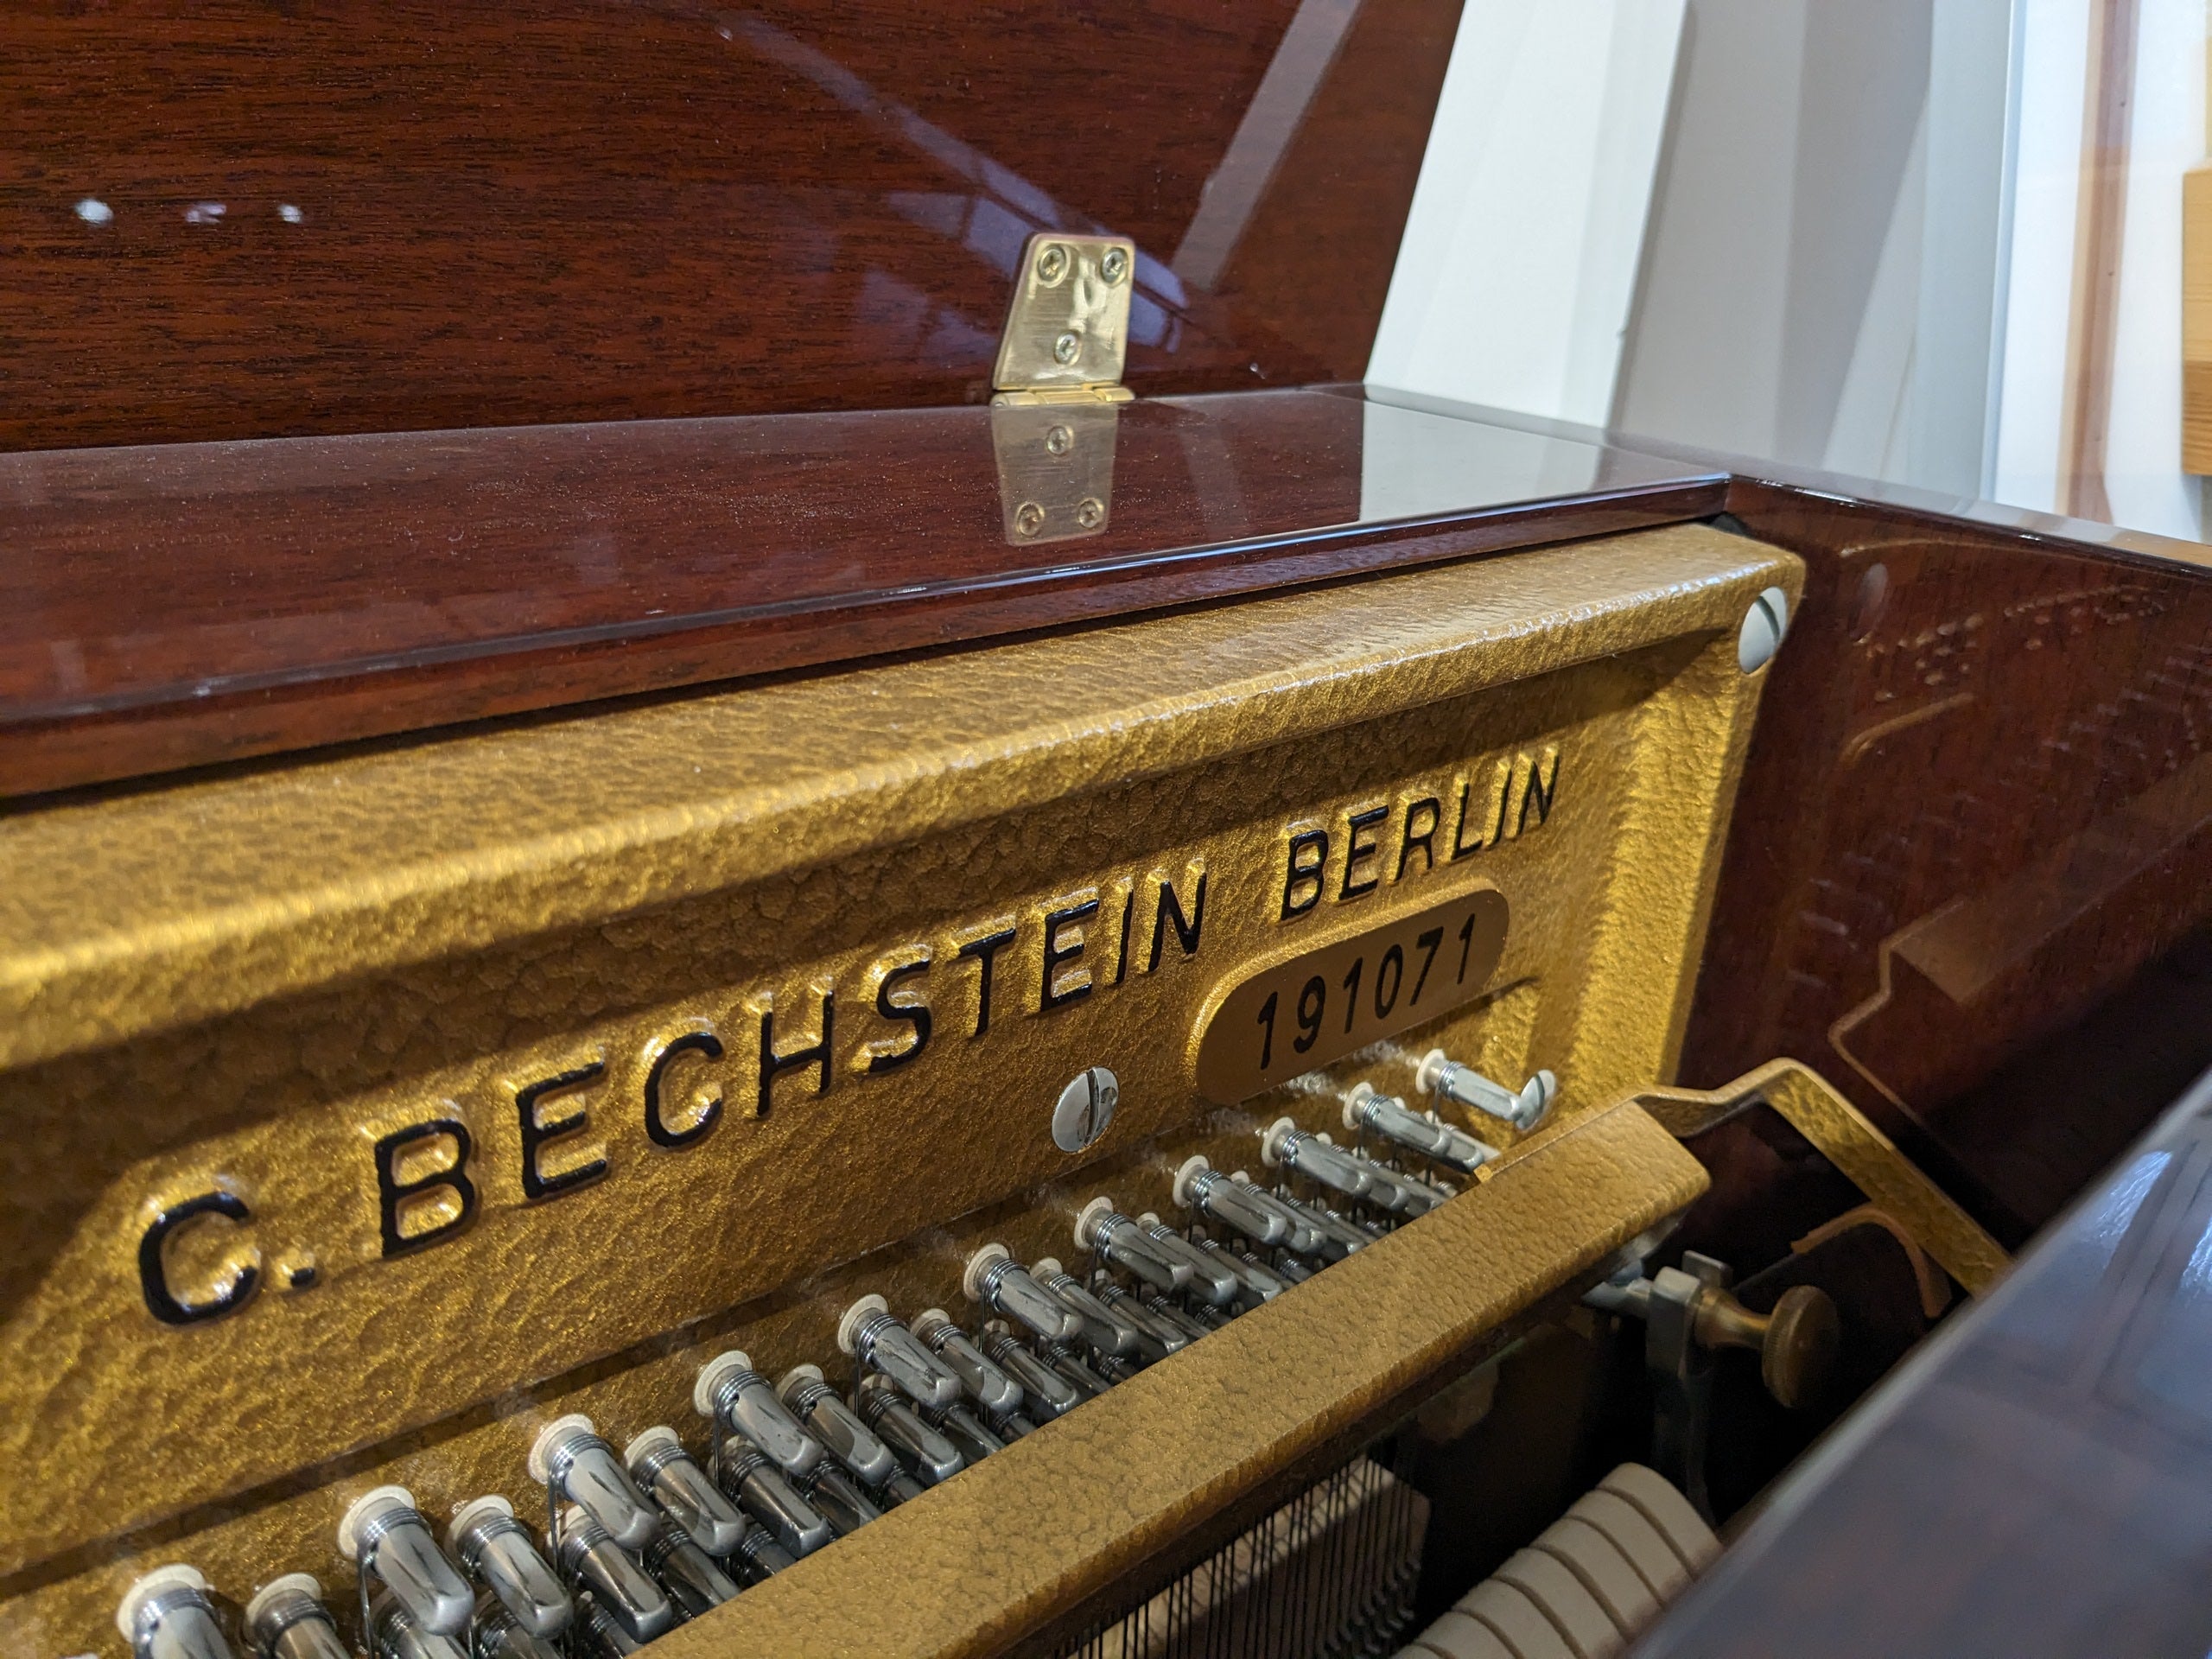 C.Bechstein Contur 118 Upright Piano Mahogany Gloss (Secondhand)